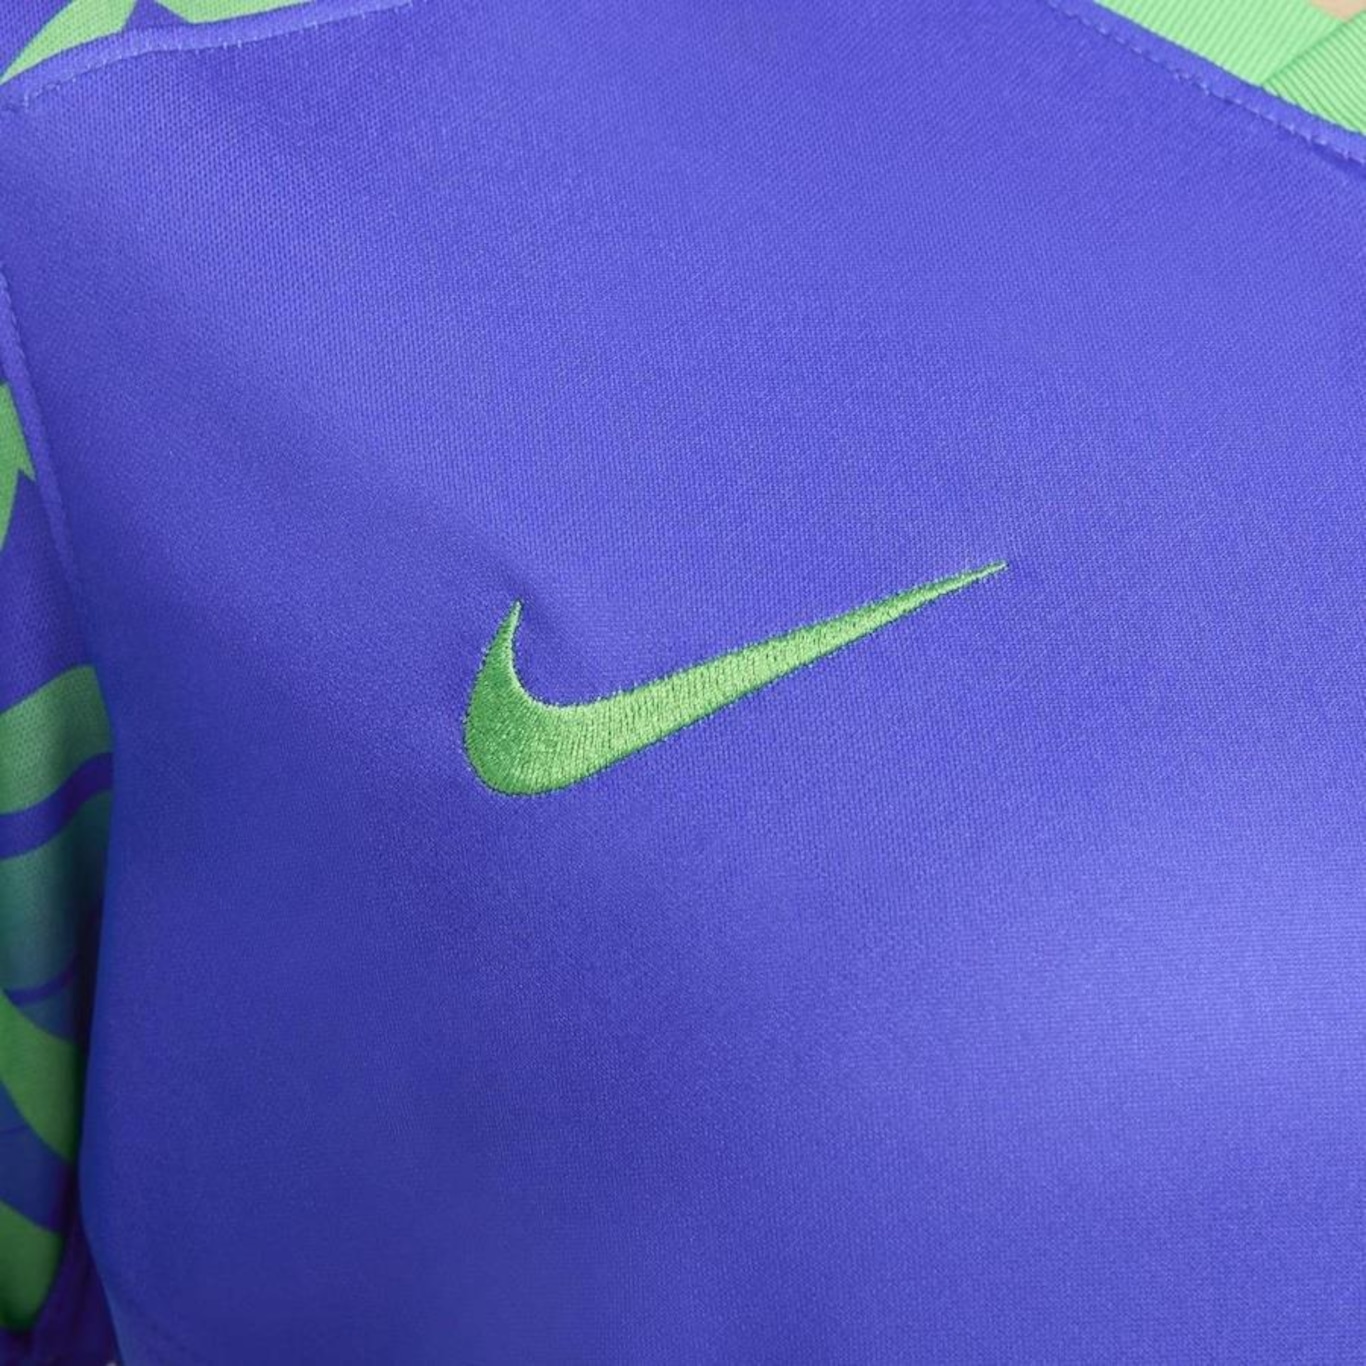 Camisa Internacional Ii 2019 Feminina Nike em 2023